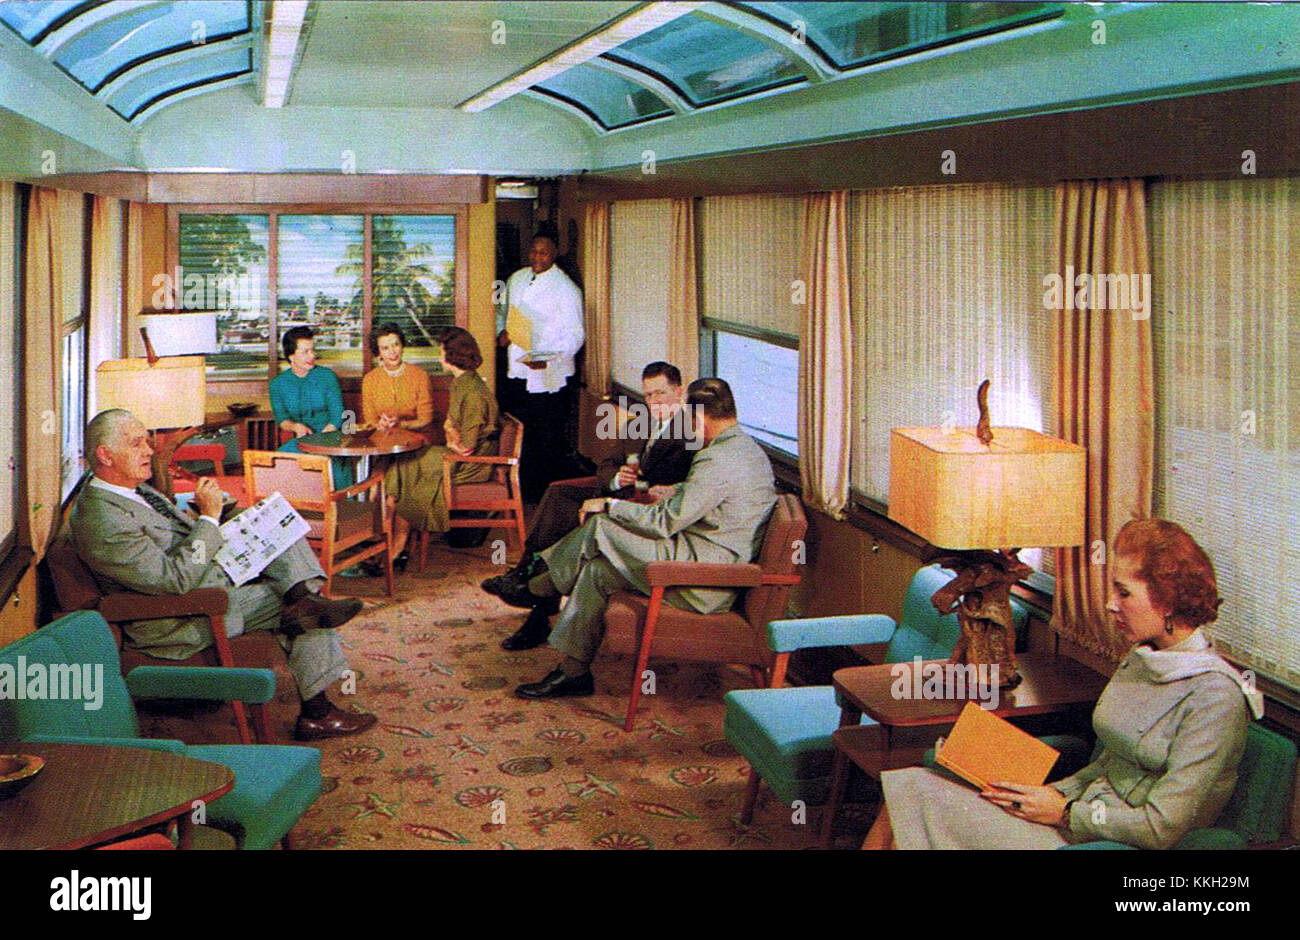 Seaboard Railroad Sun Lounge postcard Stock Photo